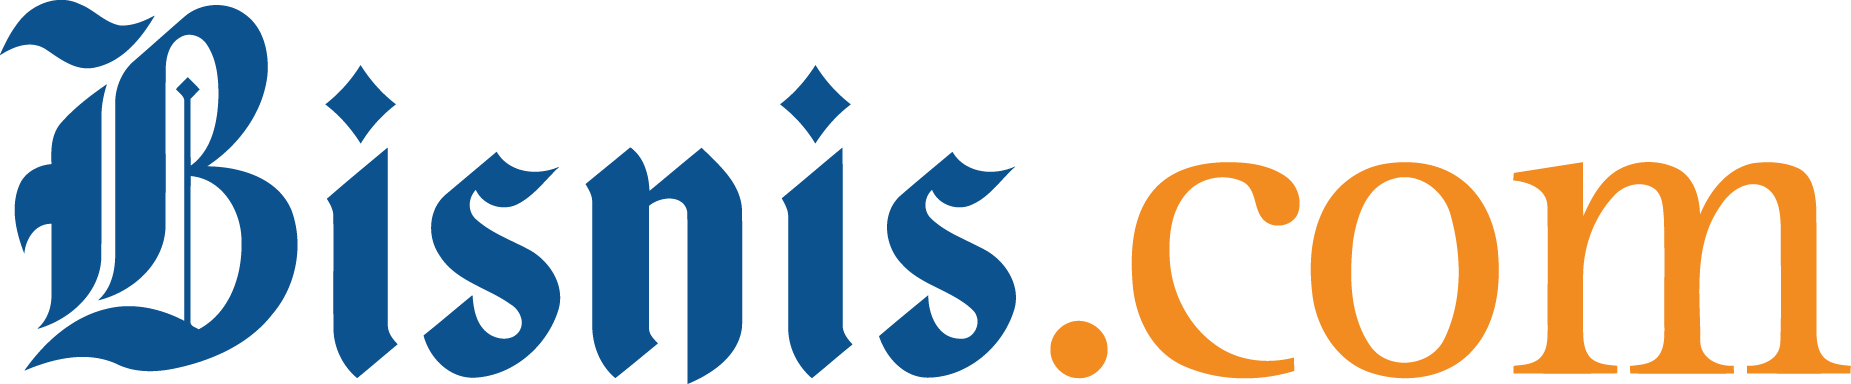 logo bisnis indonesiapng 1